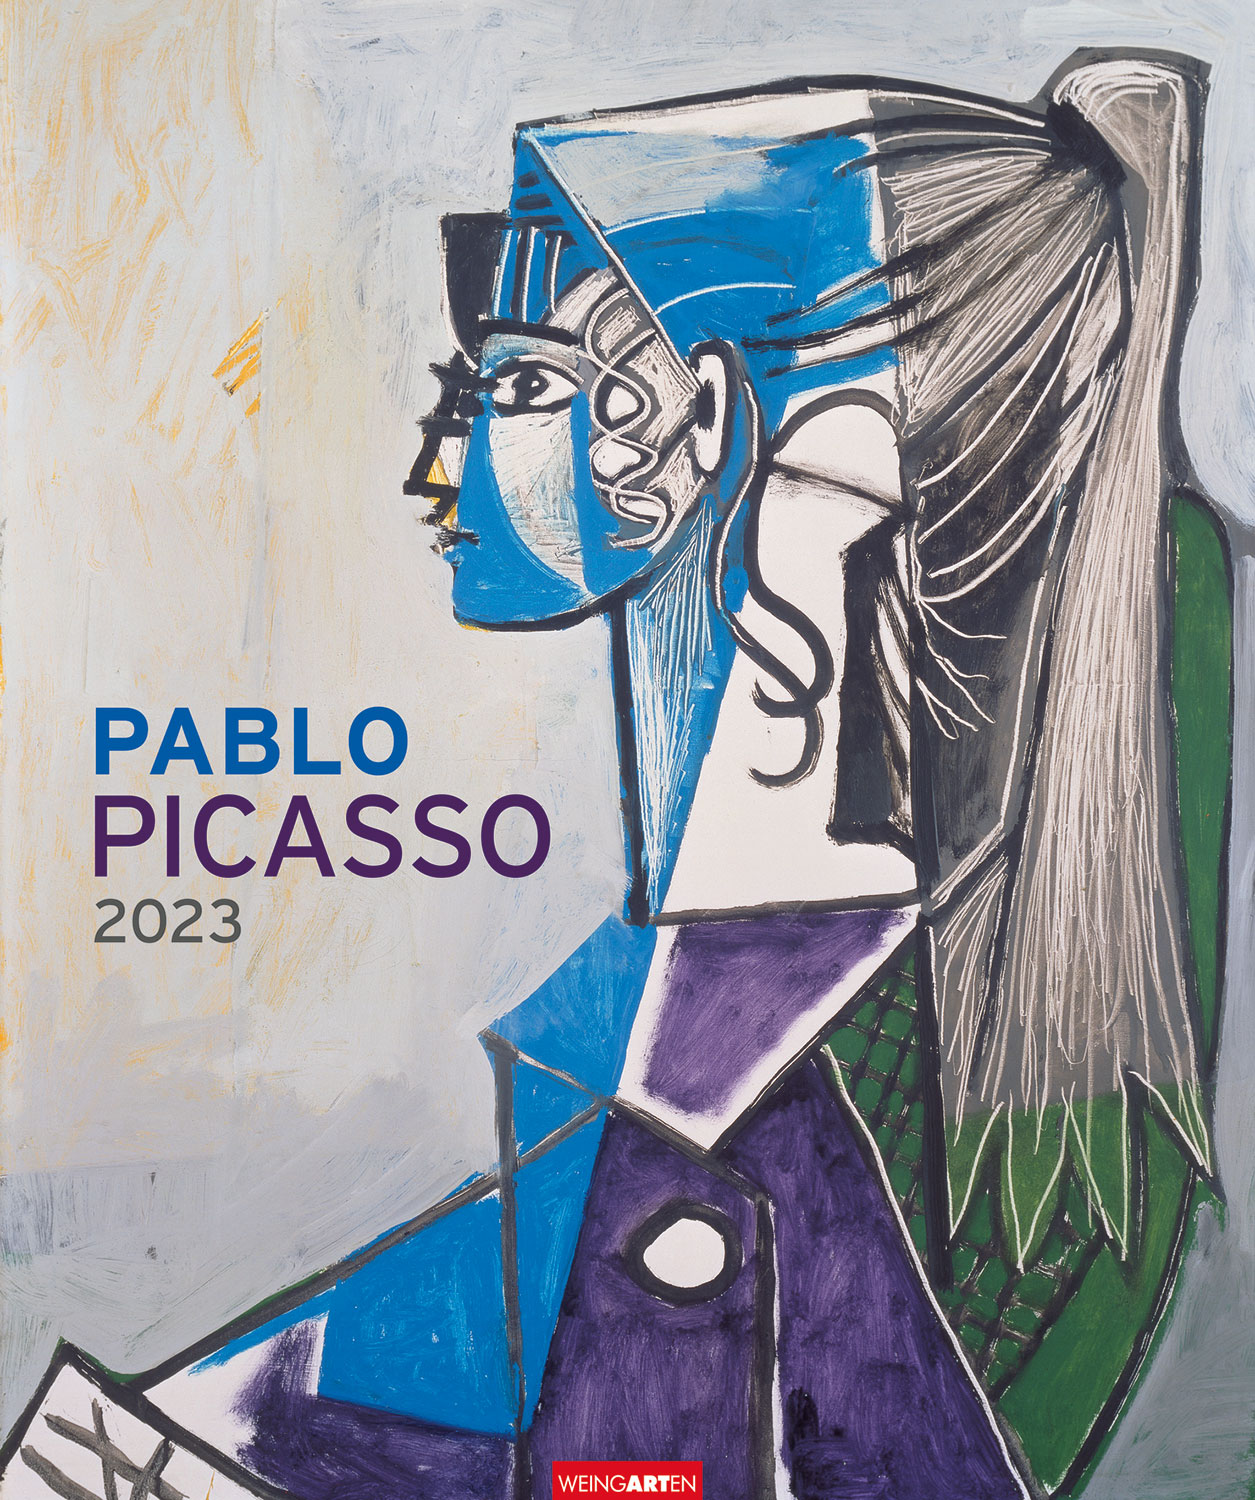 Artist calendar 2023 by Pablo Picasso